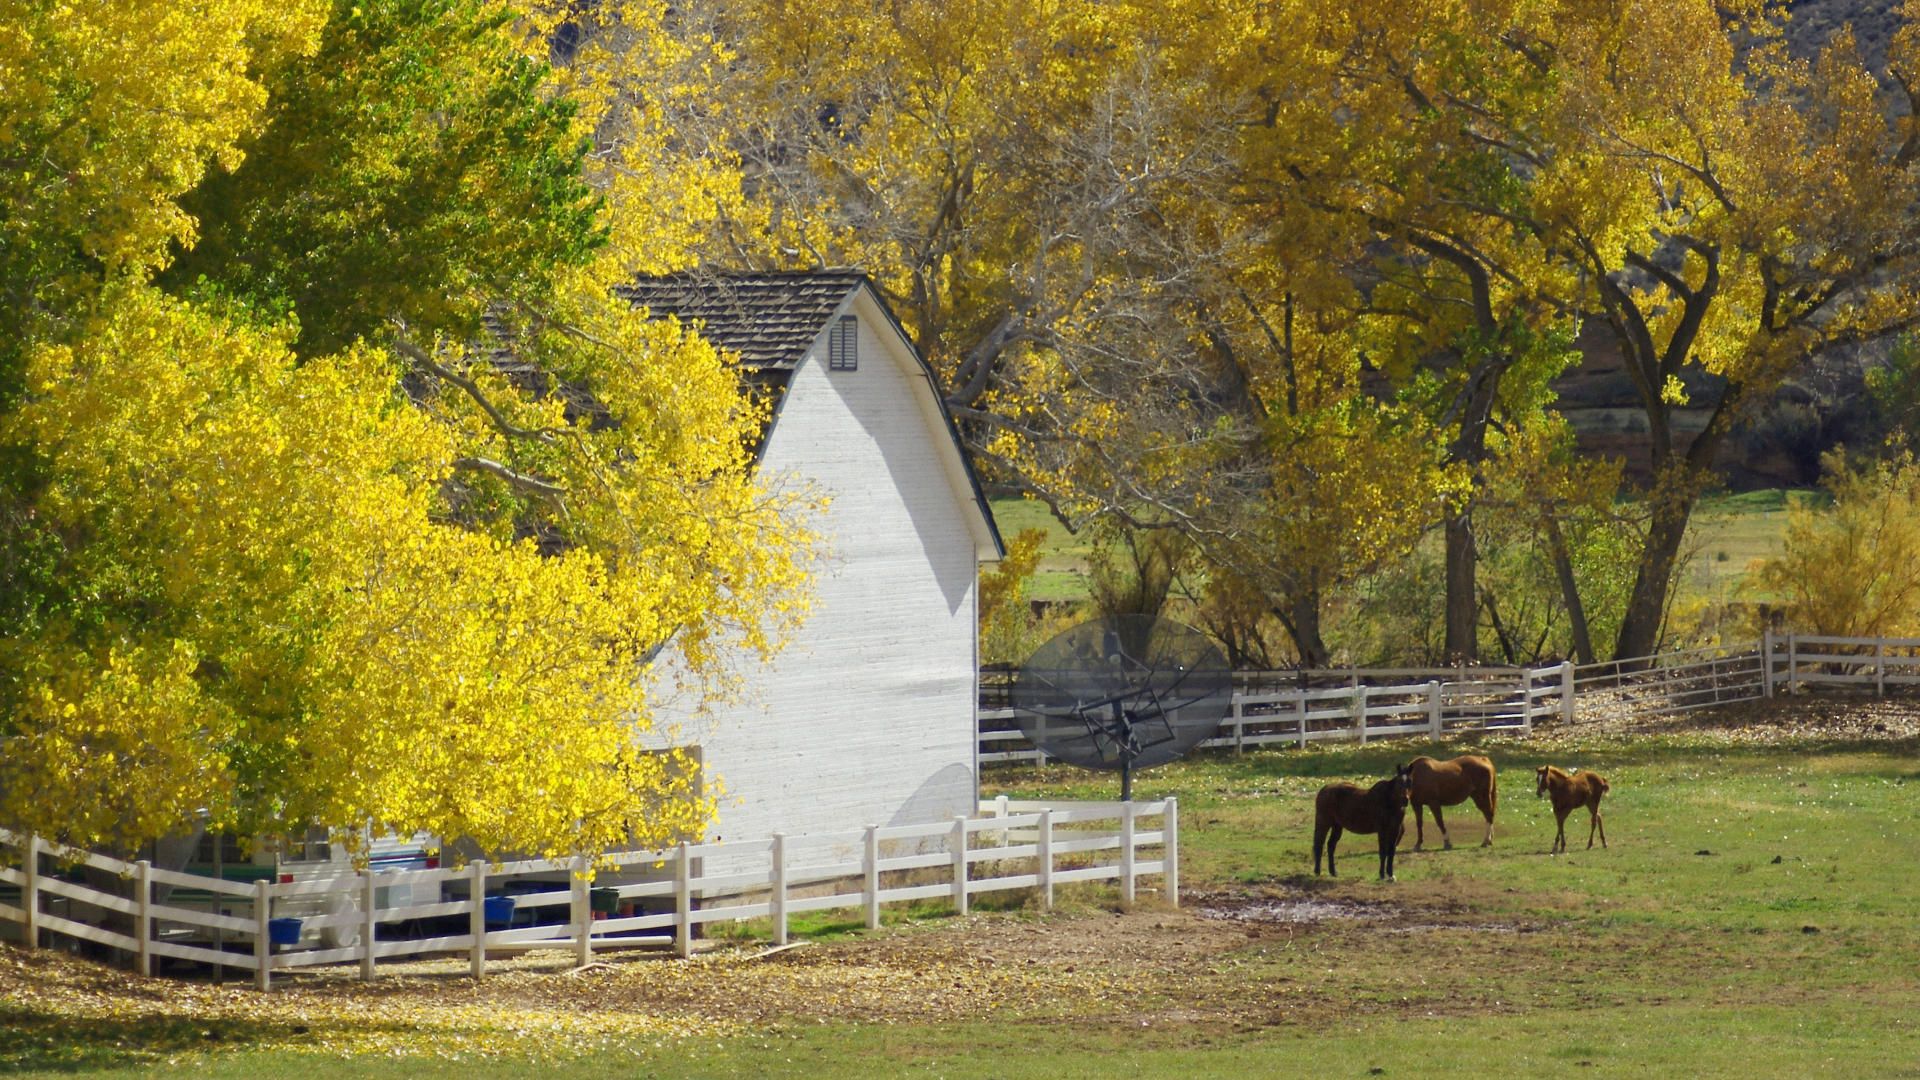 Free download Autumn country farm wallpaper ForWallpapercom